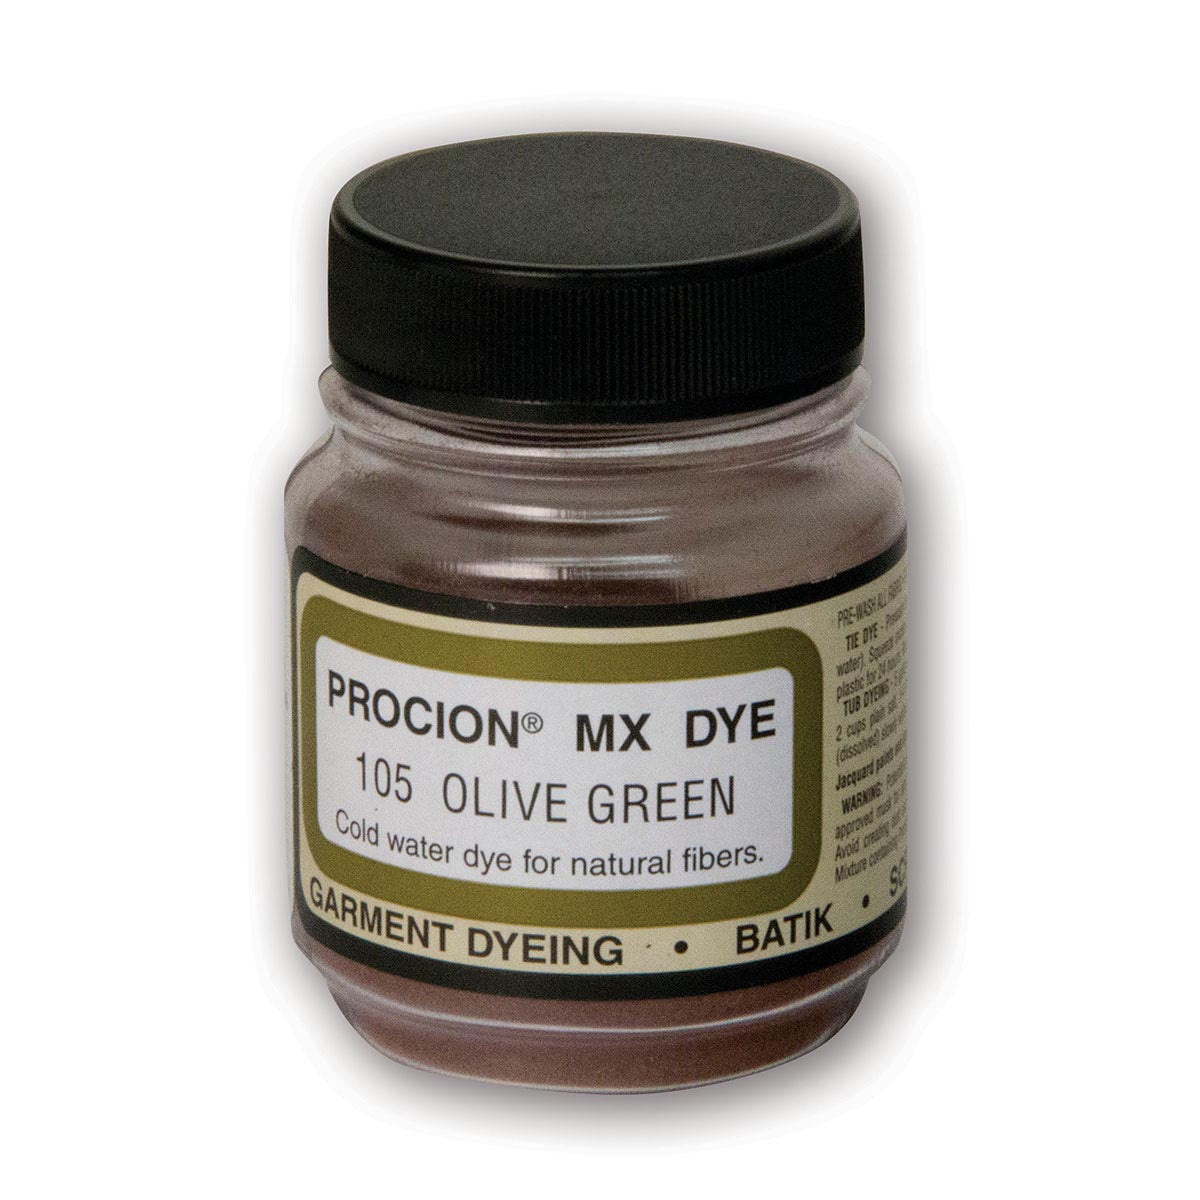 Jacquard - Procion MX Dye - Tissu Textile - Vert Olive 105